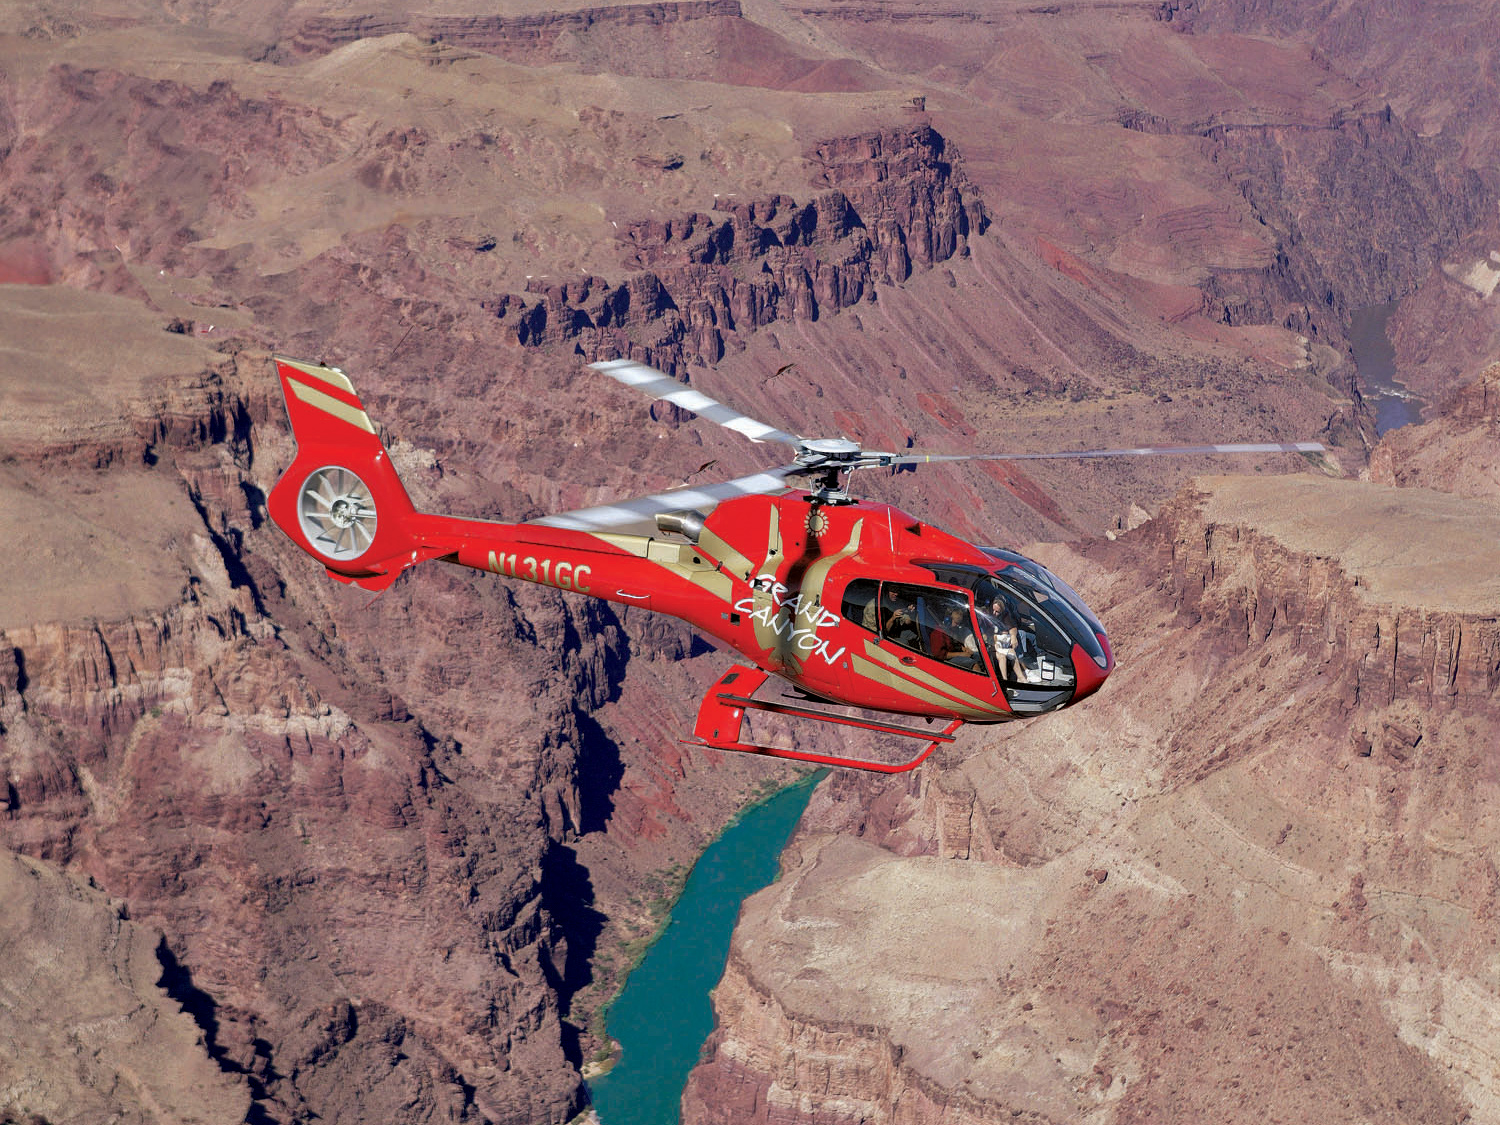 grand canyon tour las vegas helicopter